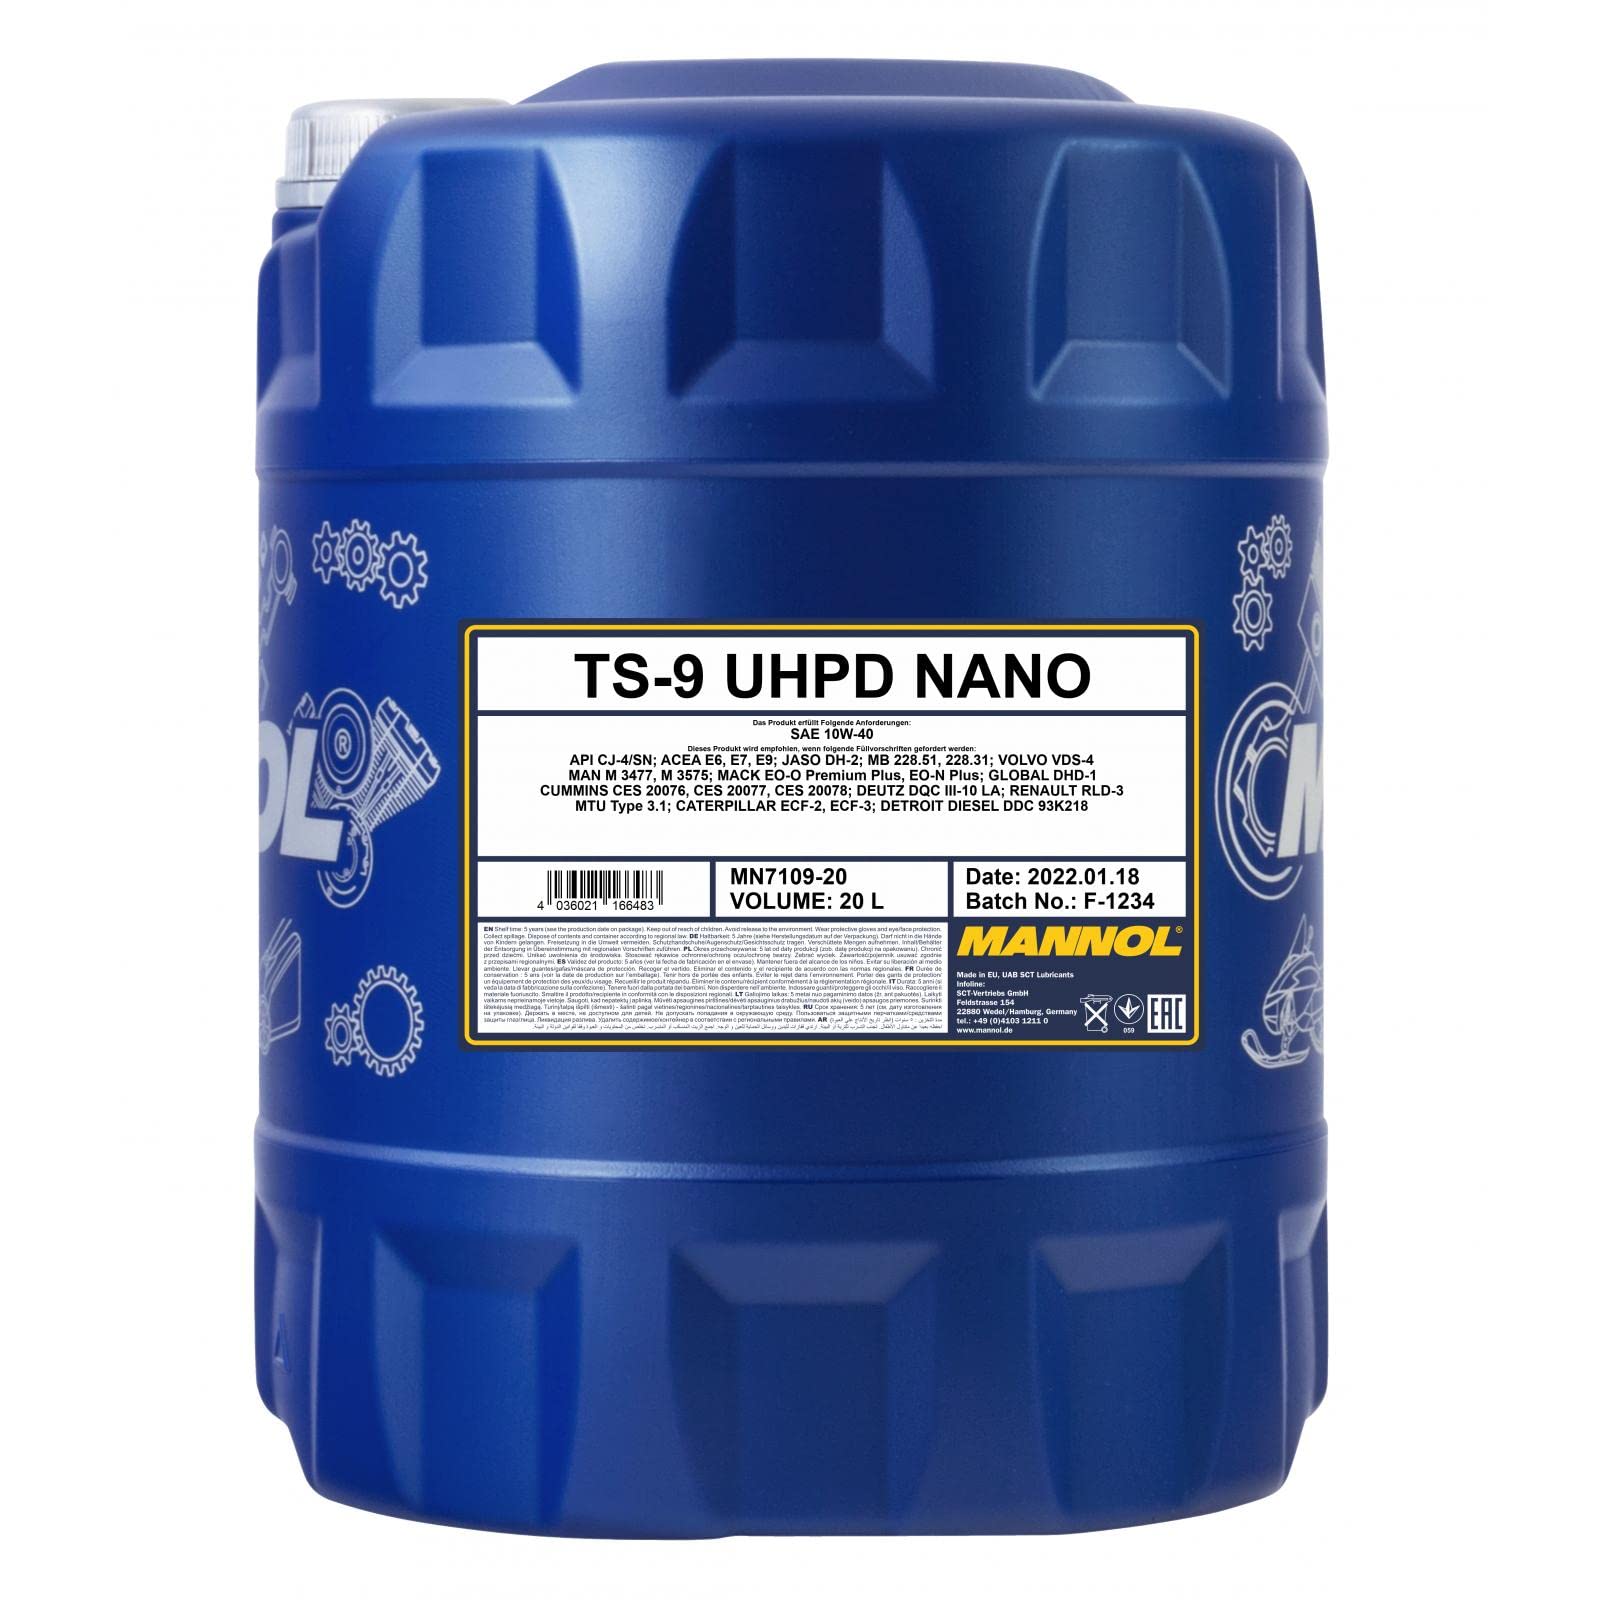 20 Liter MANNOL TS-9 UHPD Nano API CI-4/CH-4/CG-4/CF-4/SL 10W-40 Motoröl Öl von MANNOL